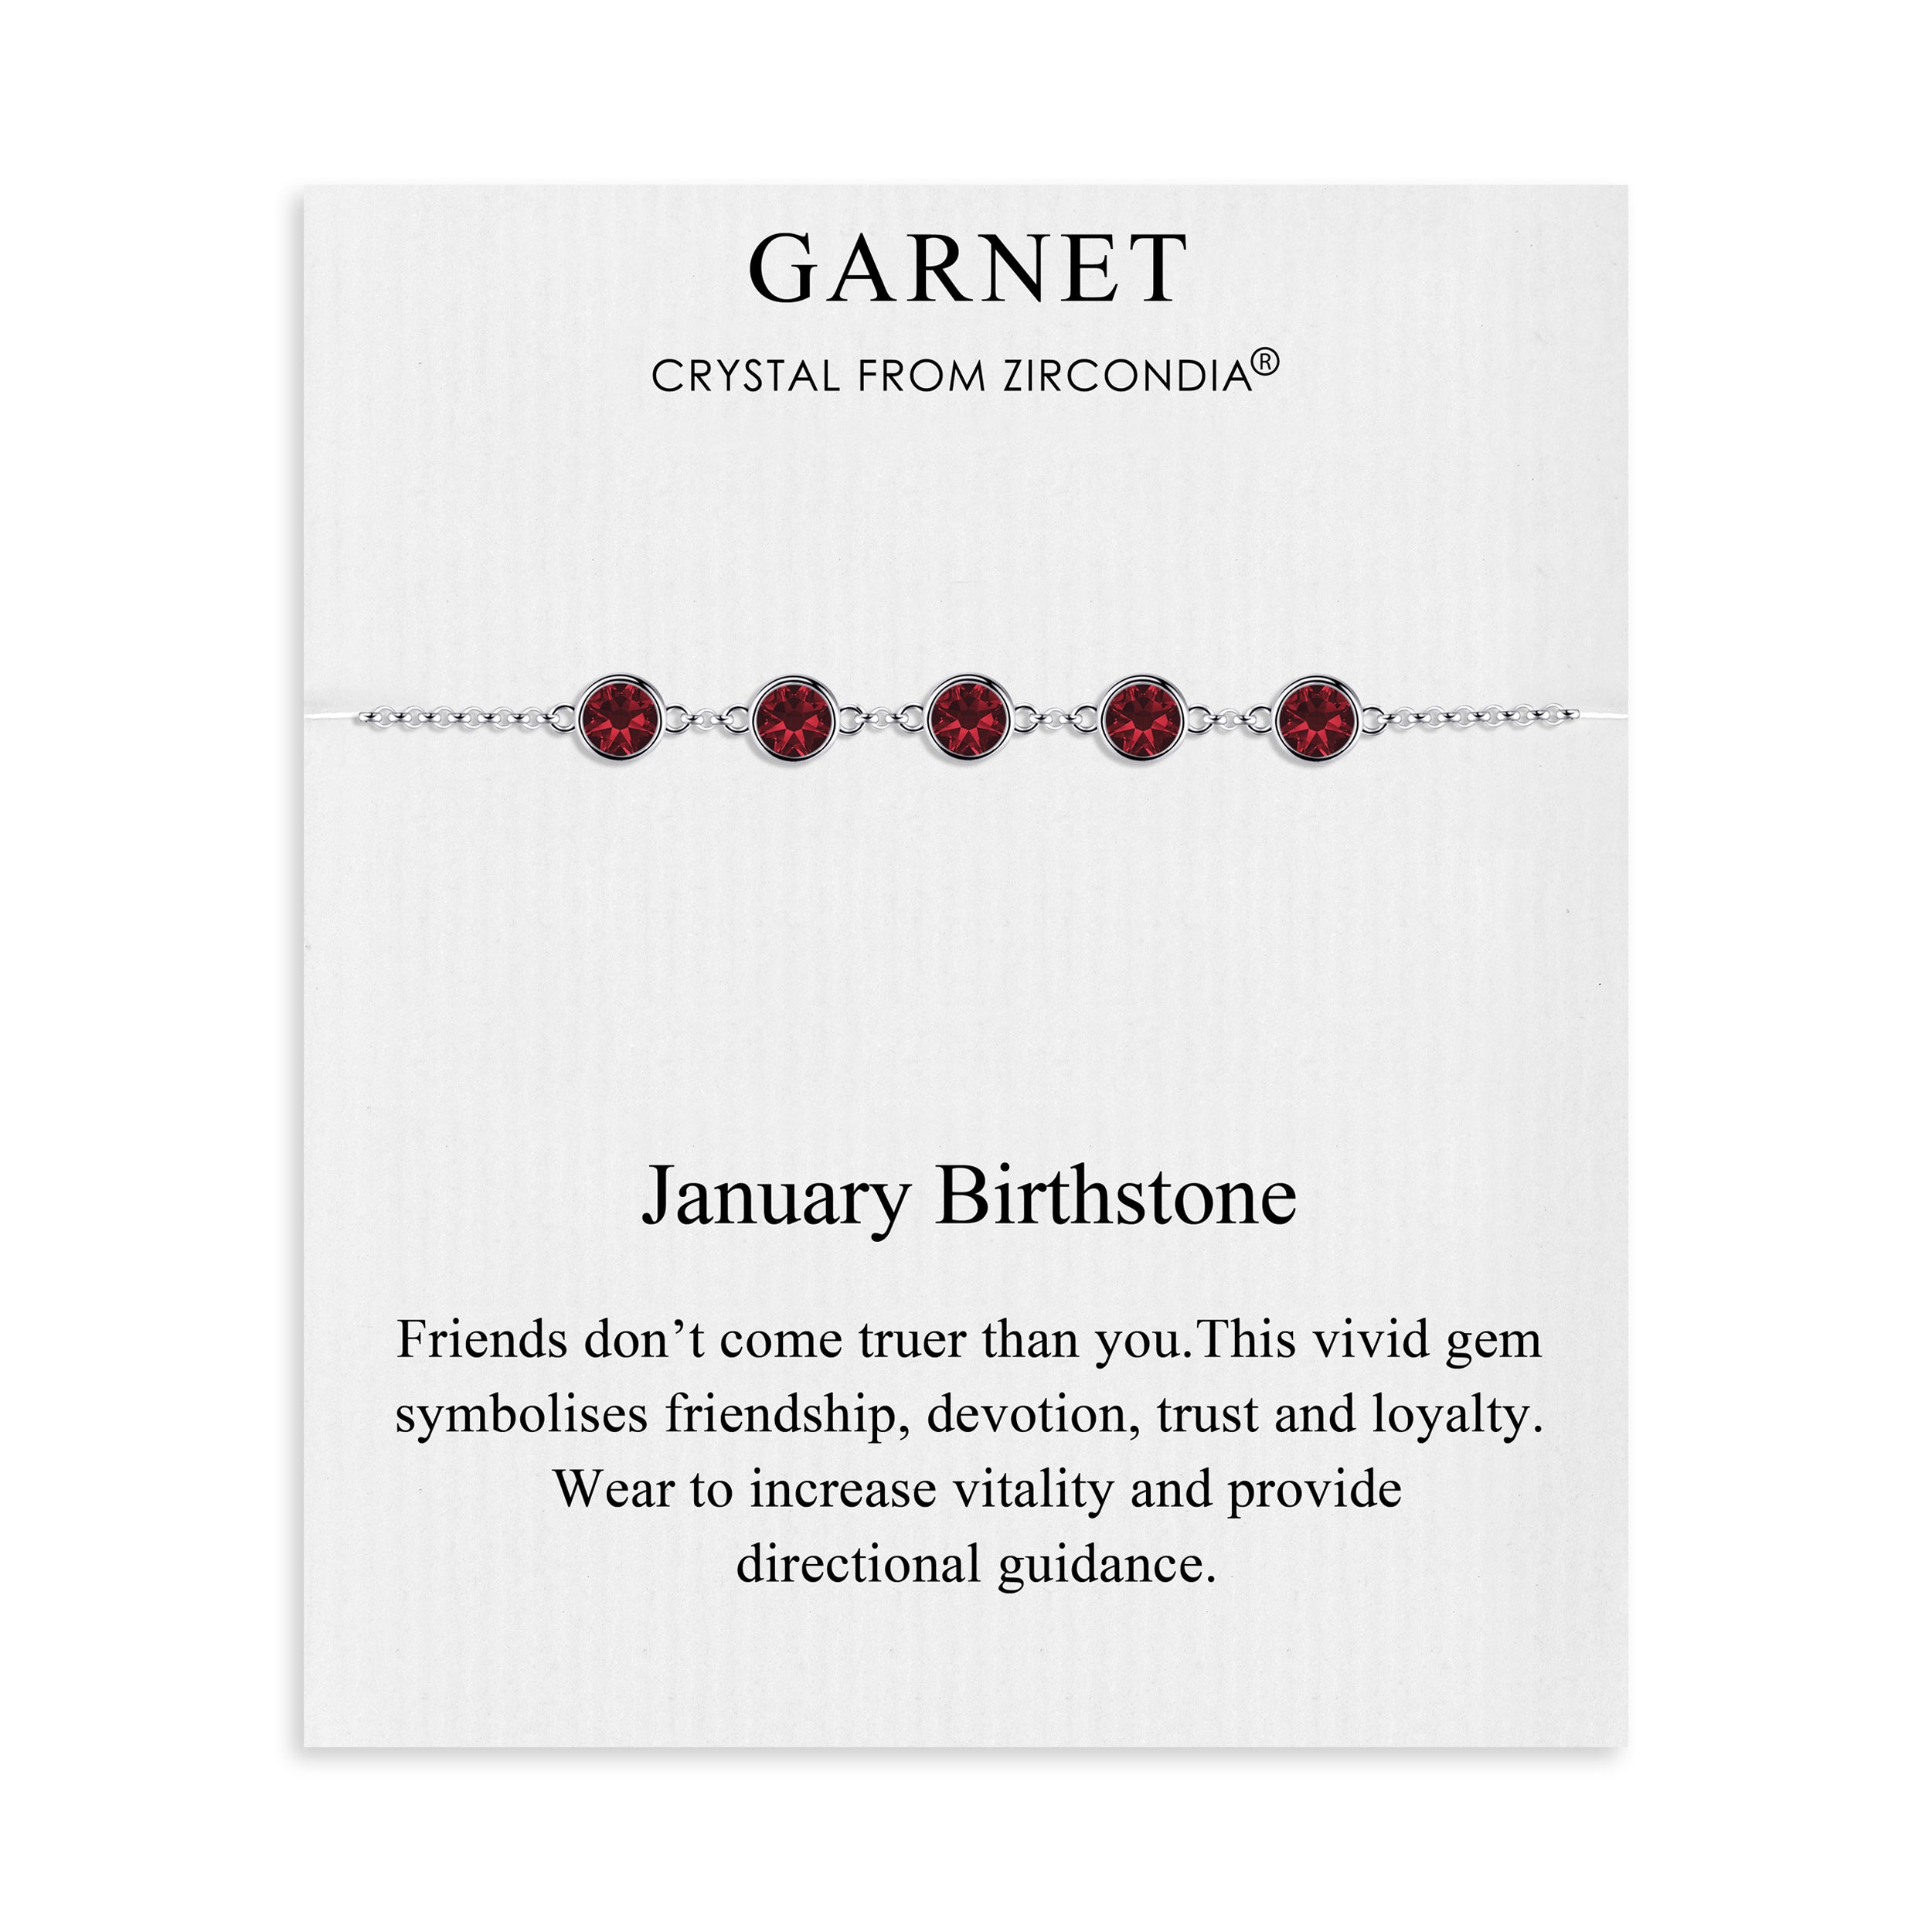 January Birthstone Bracelet Created with Garnet Zircondia® Crystals by Philip Jones Jewellery